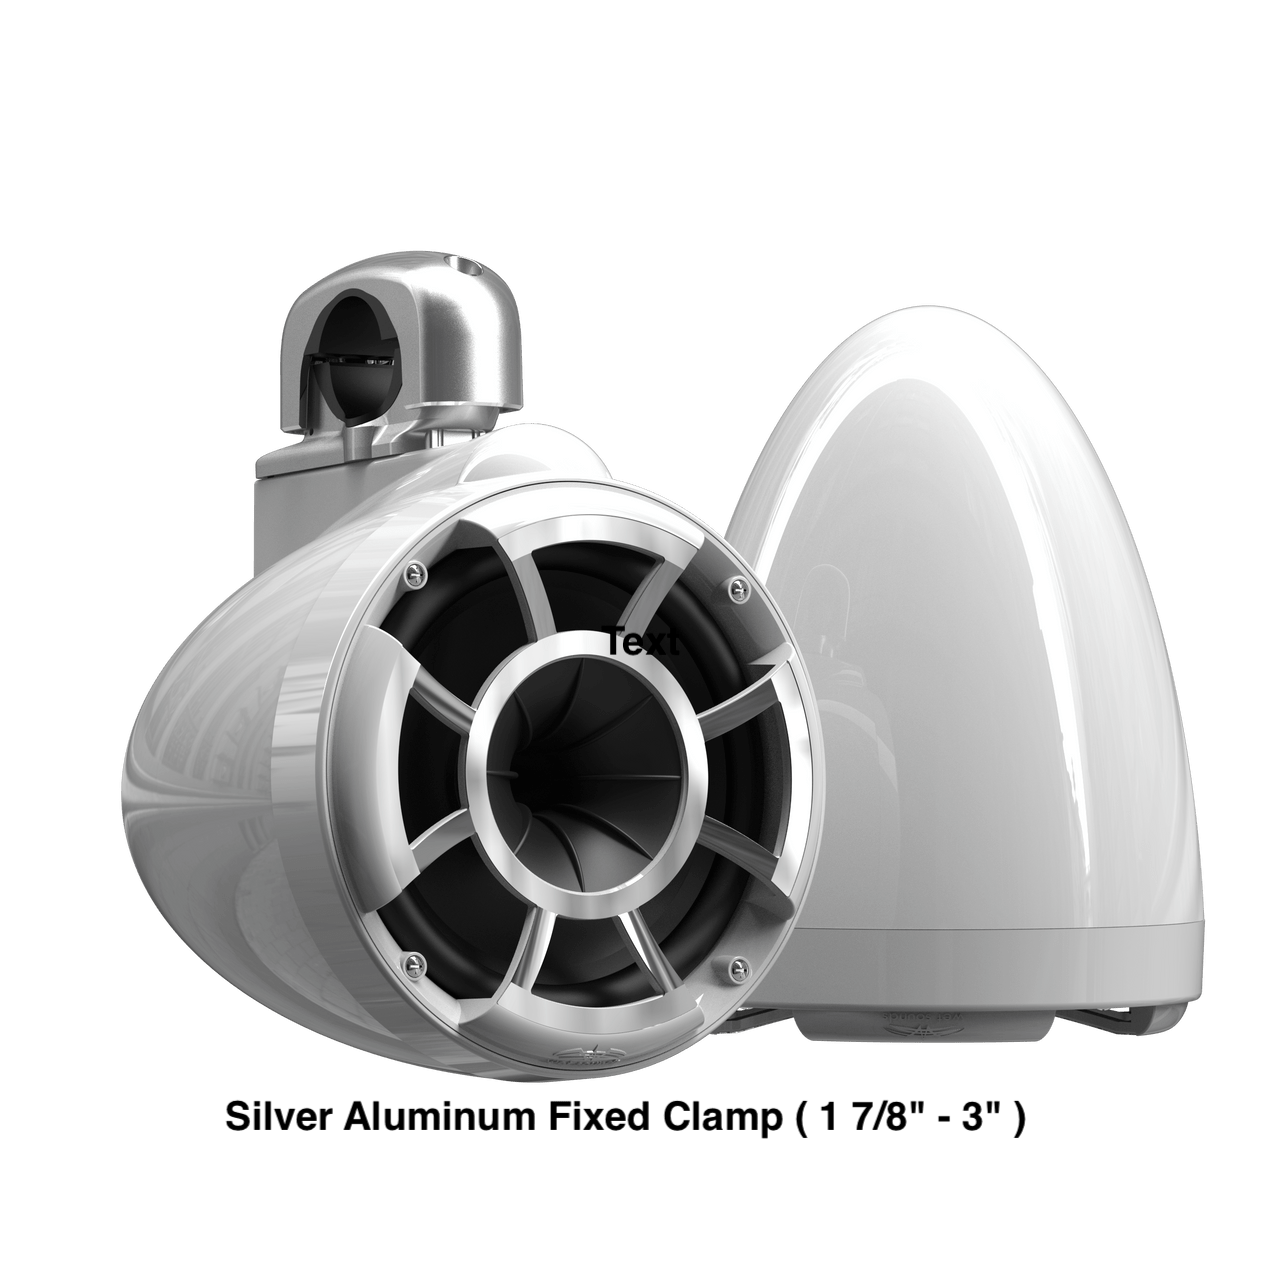 Wet Sounds Boat Wake Tower Speakers Silver Aluminum Fixed Clamp ( 1 7/8" - 3" ) Wet Sounds REV8™ White V2 | Revolution Series 8" White Tower Speakers